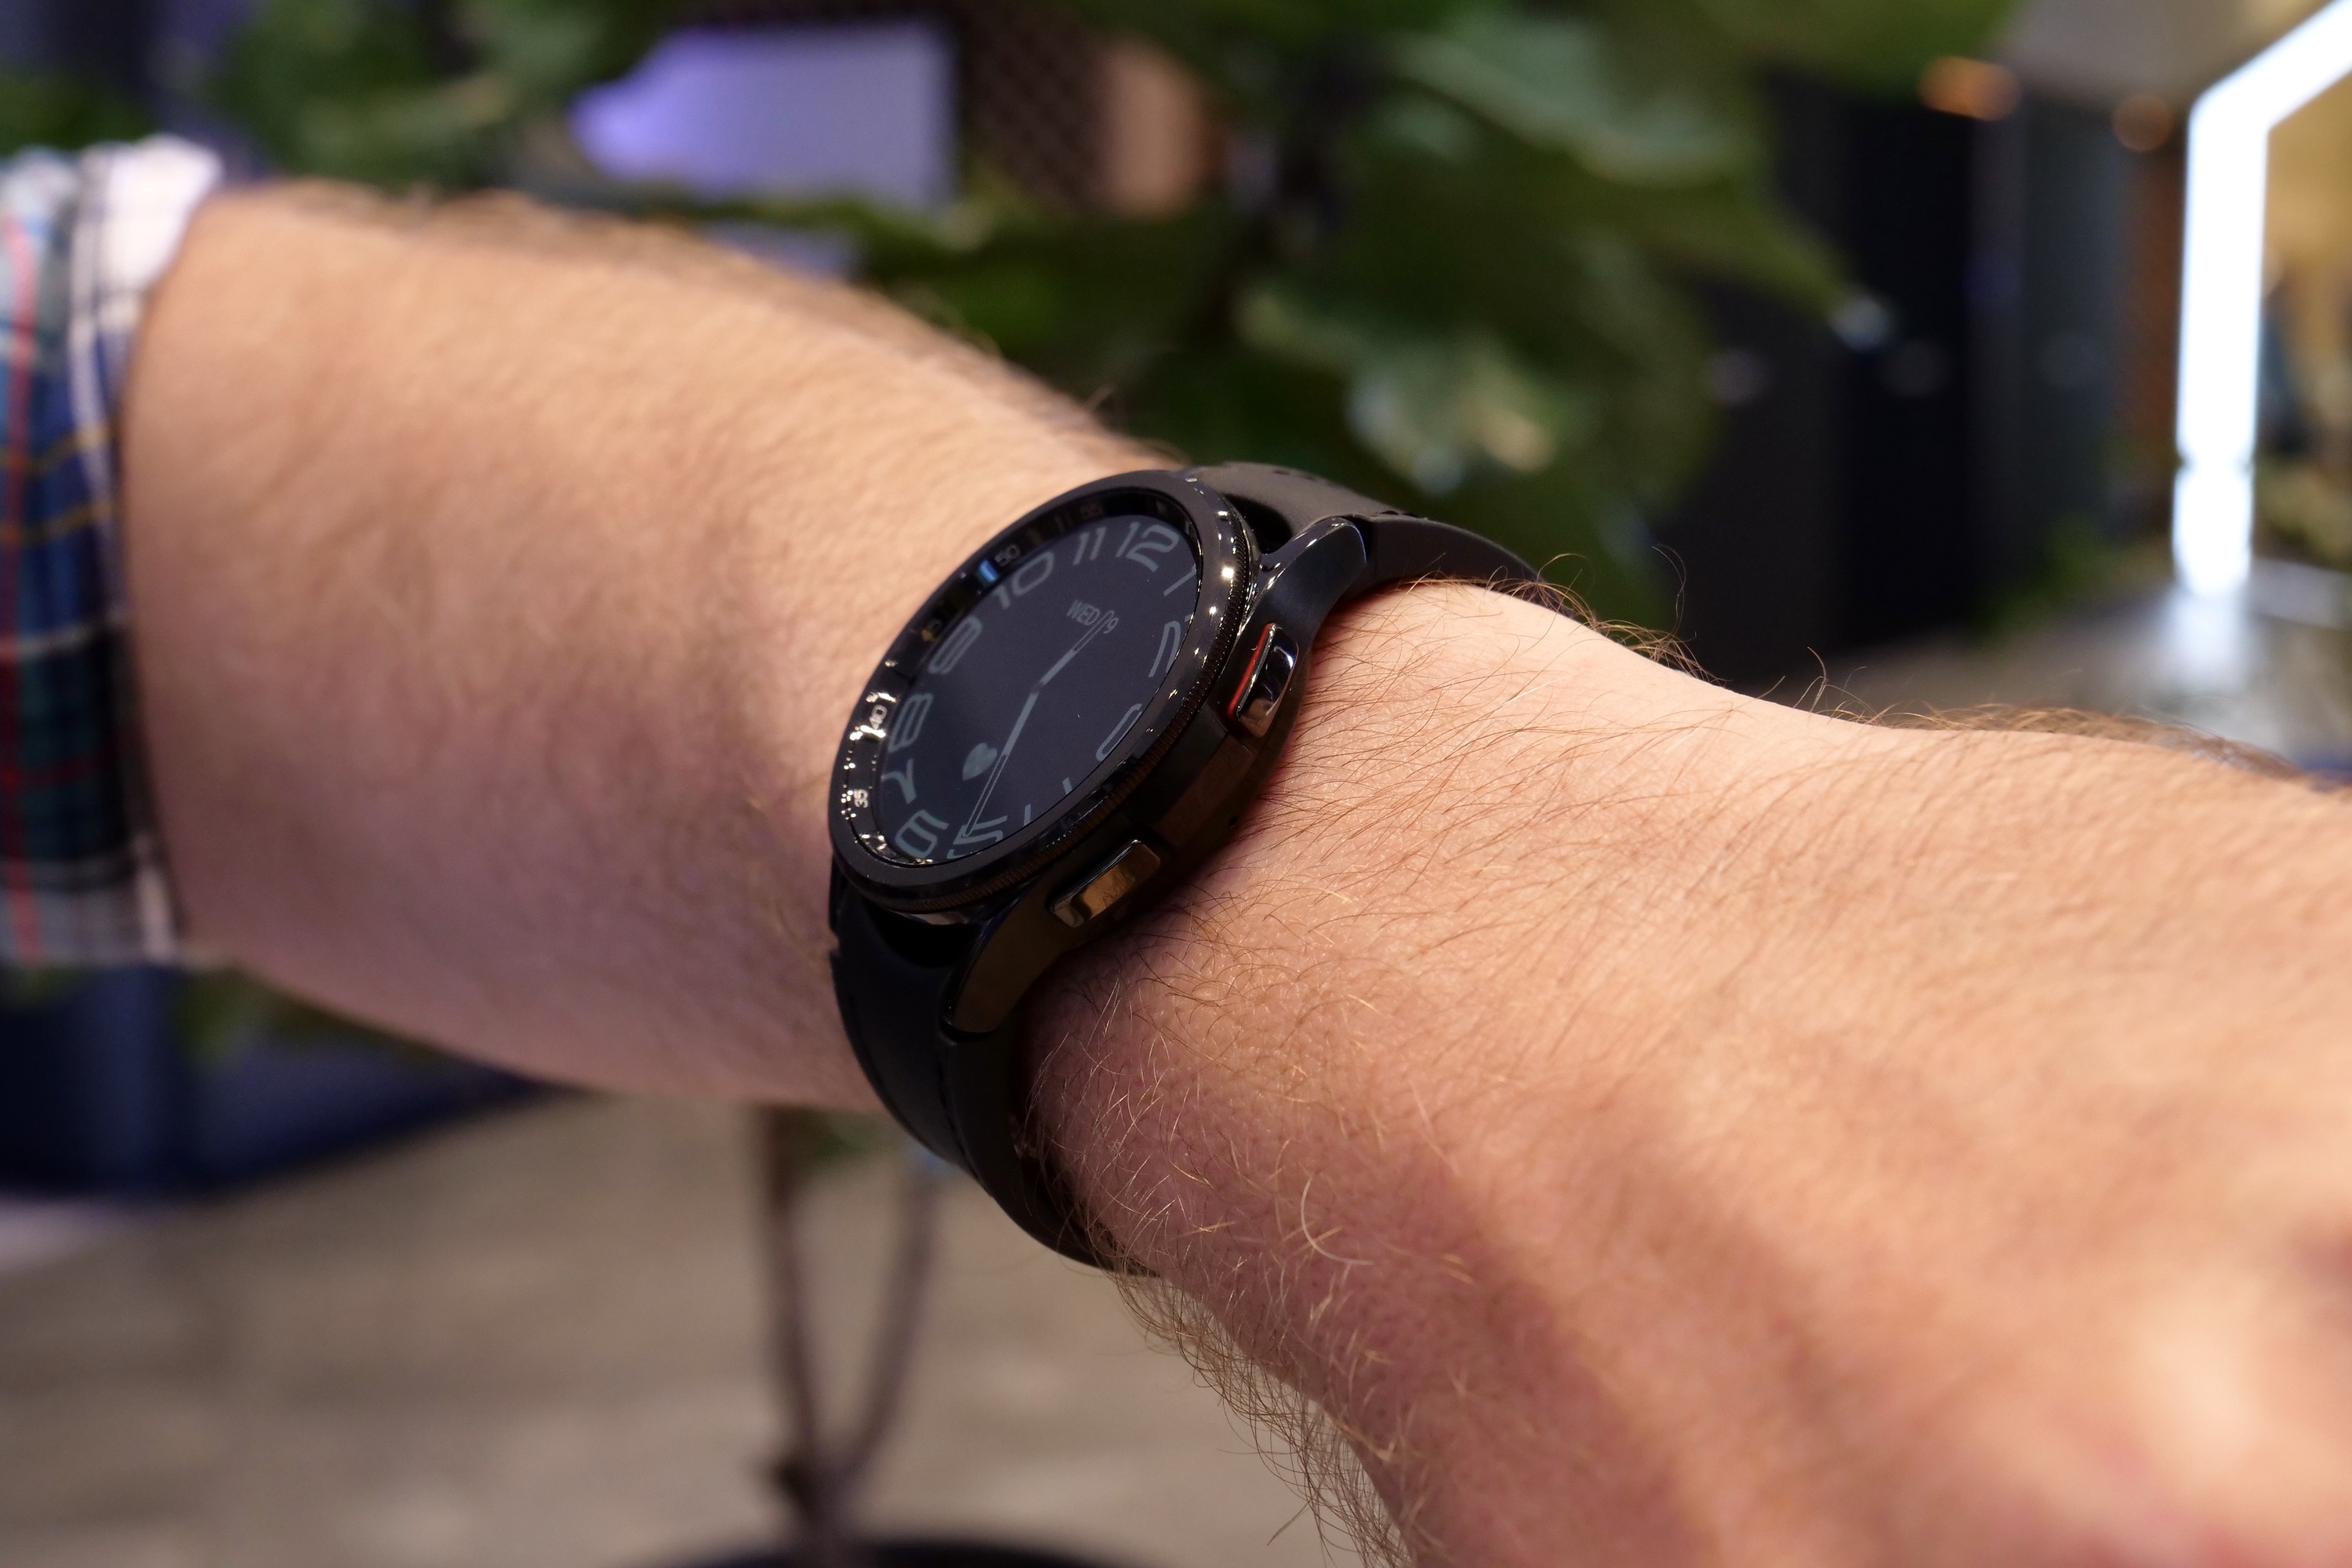 The 43mm Samsung Galaxy Watch Classic in black.